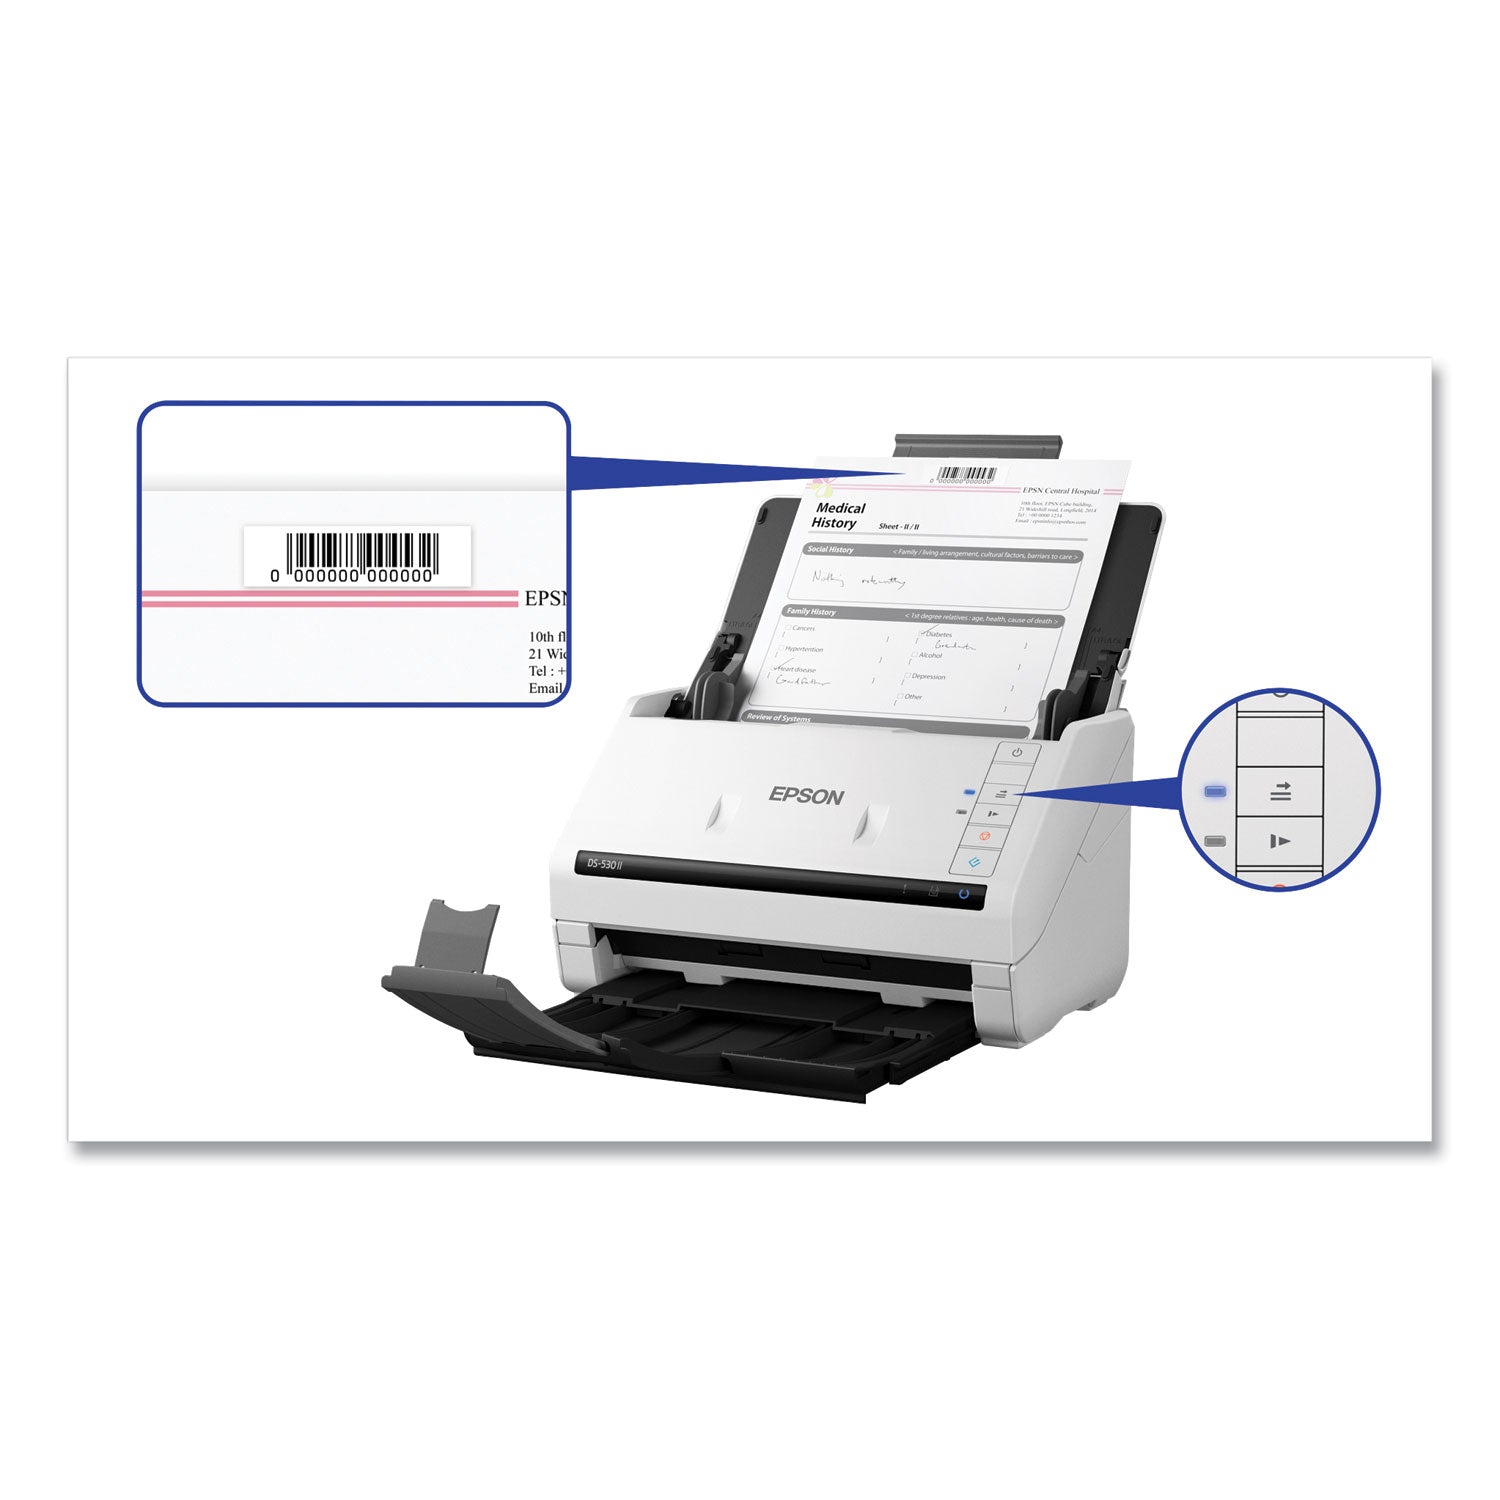 ds-530-ii-color-duplex-document-scanner-600-dpi-optical-resolution-50-sheet-duplex-auto-document-feeder_epsb11b261202 - 6